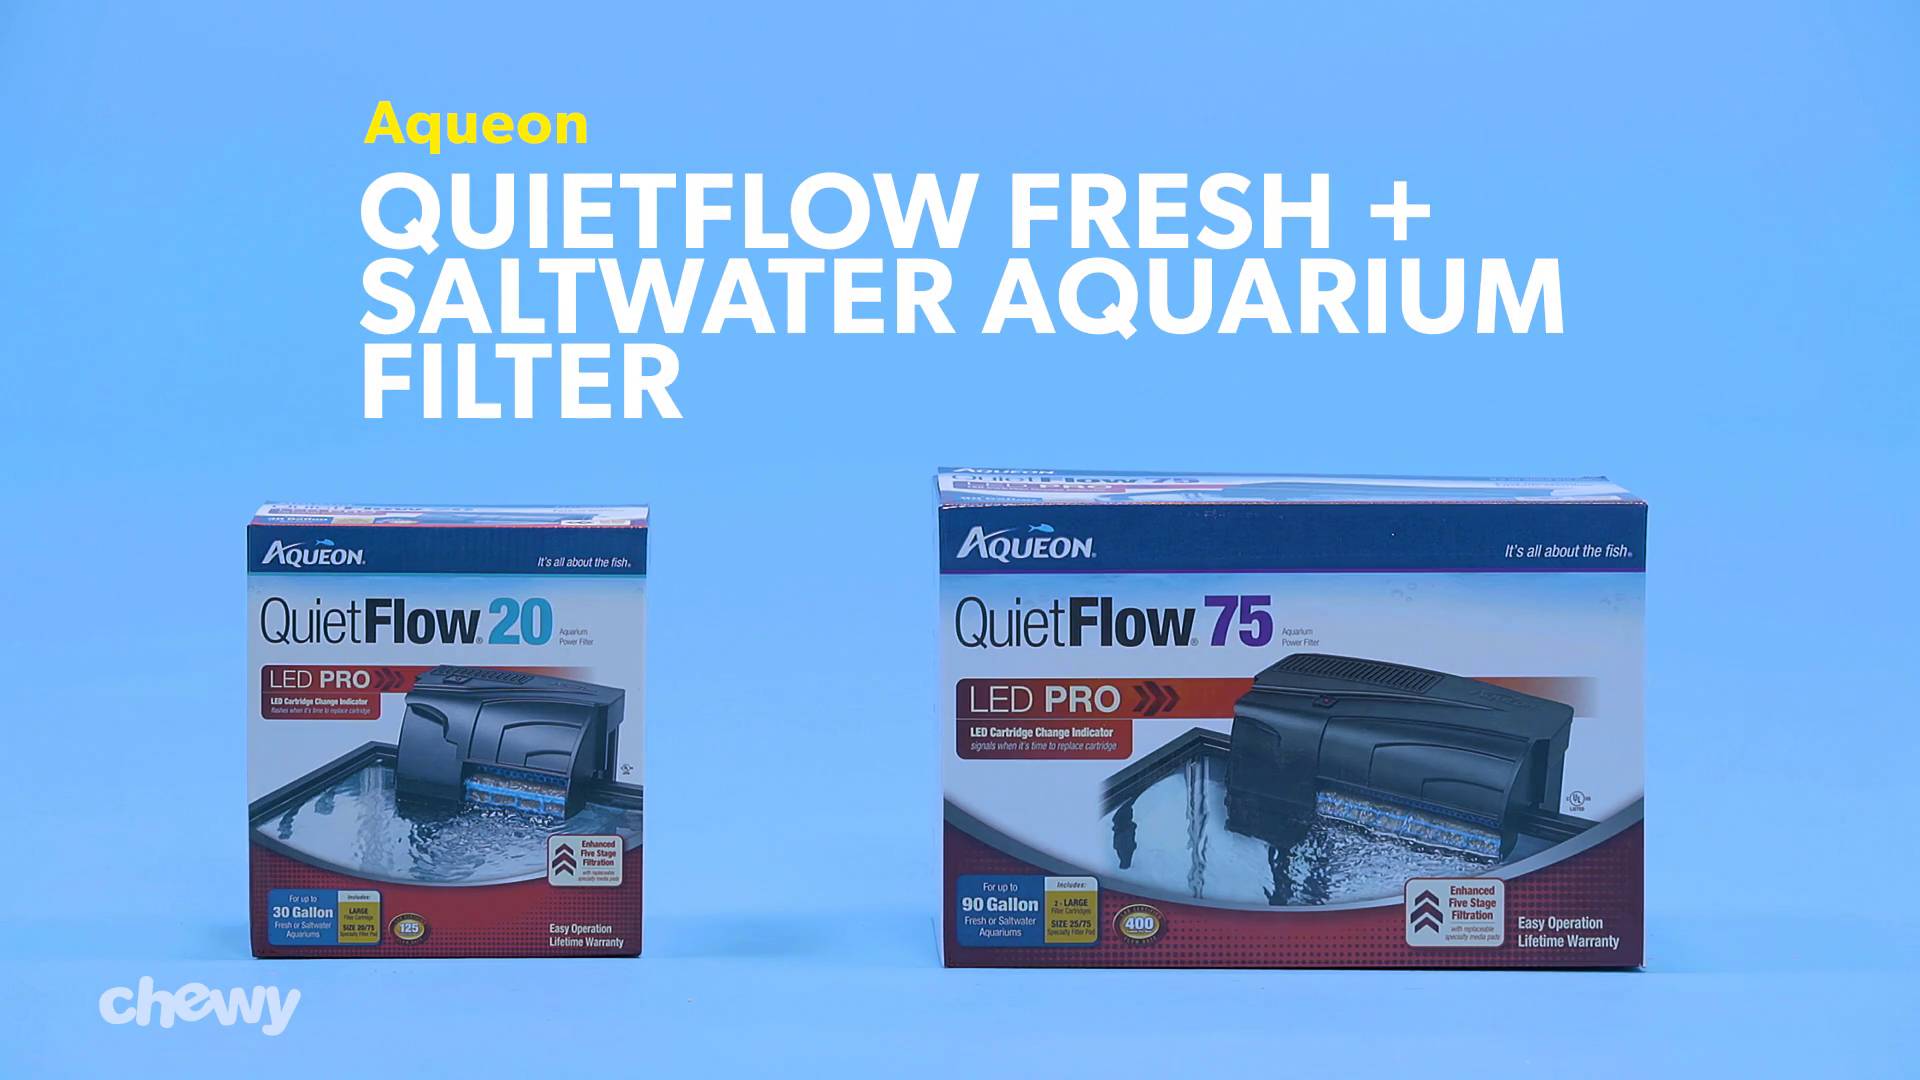 55/75 Filter for Tanks Up to 90 Gal. Aqueon Quiet Flow Aquarium Power Filters 